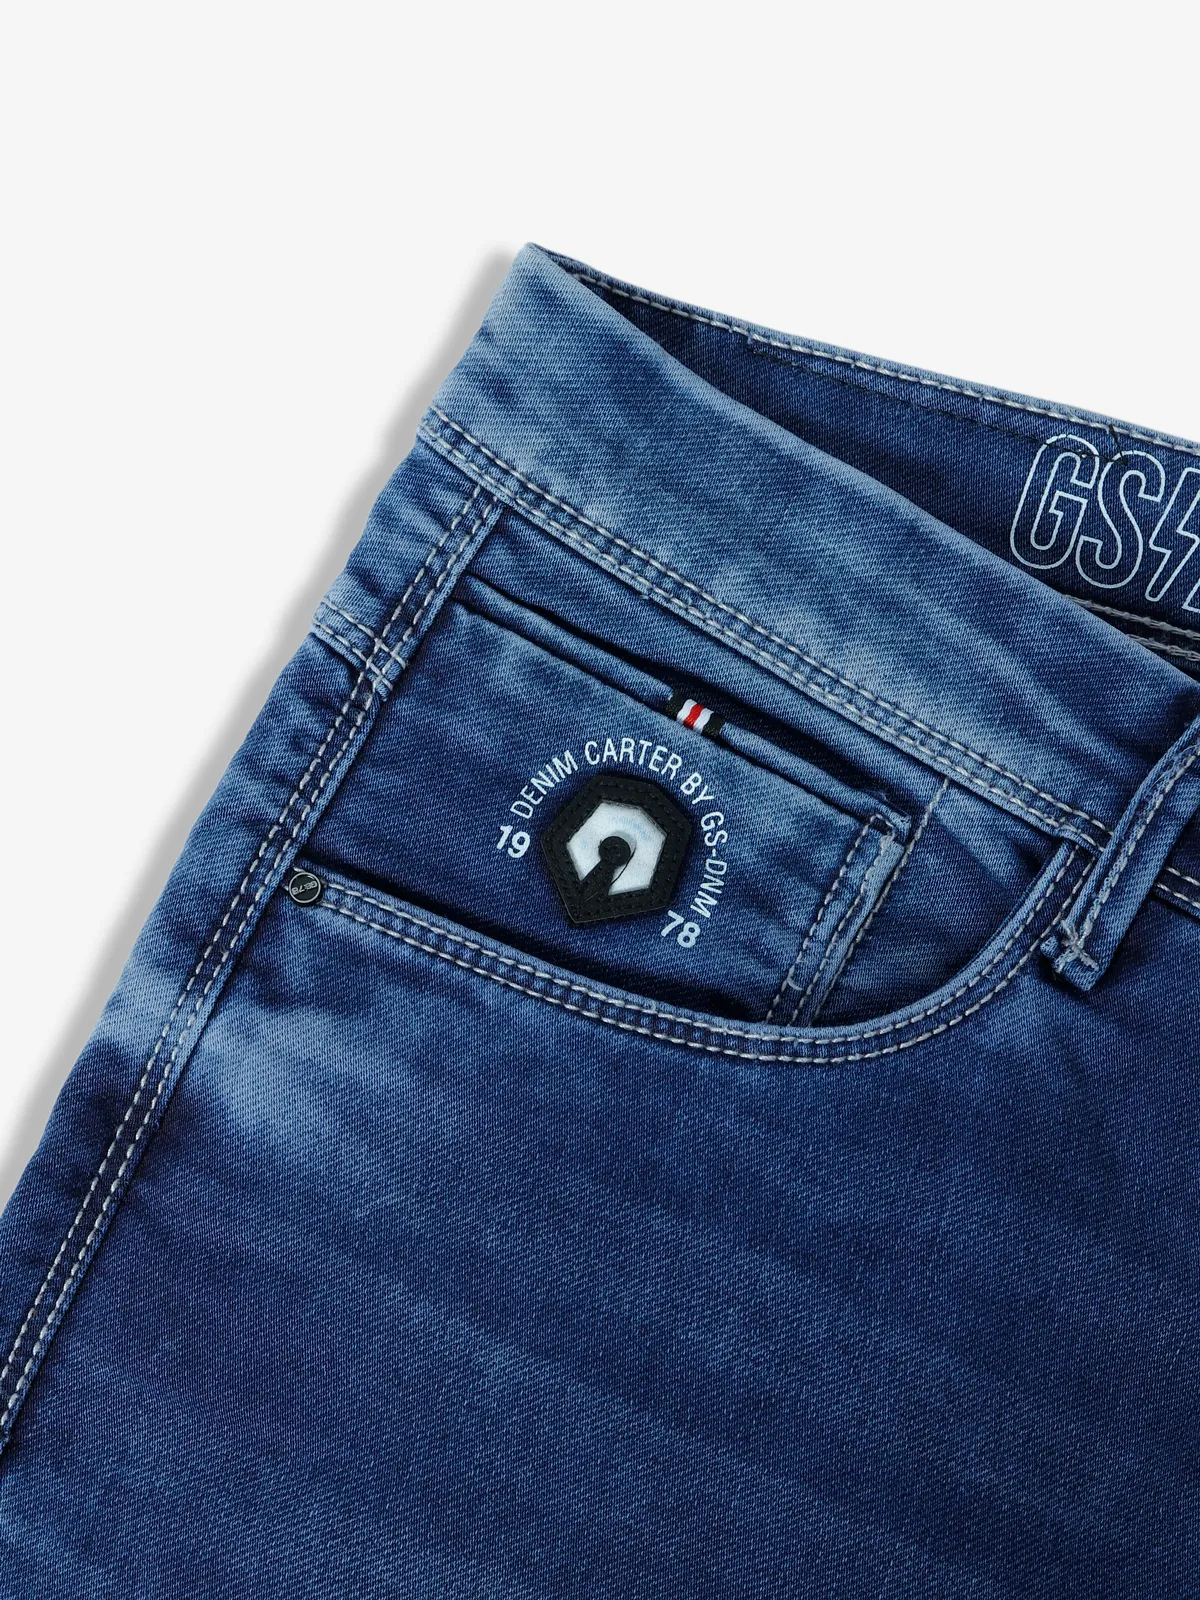 GS78 indigo blue washed slim fit jeans